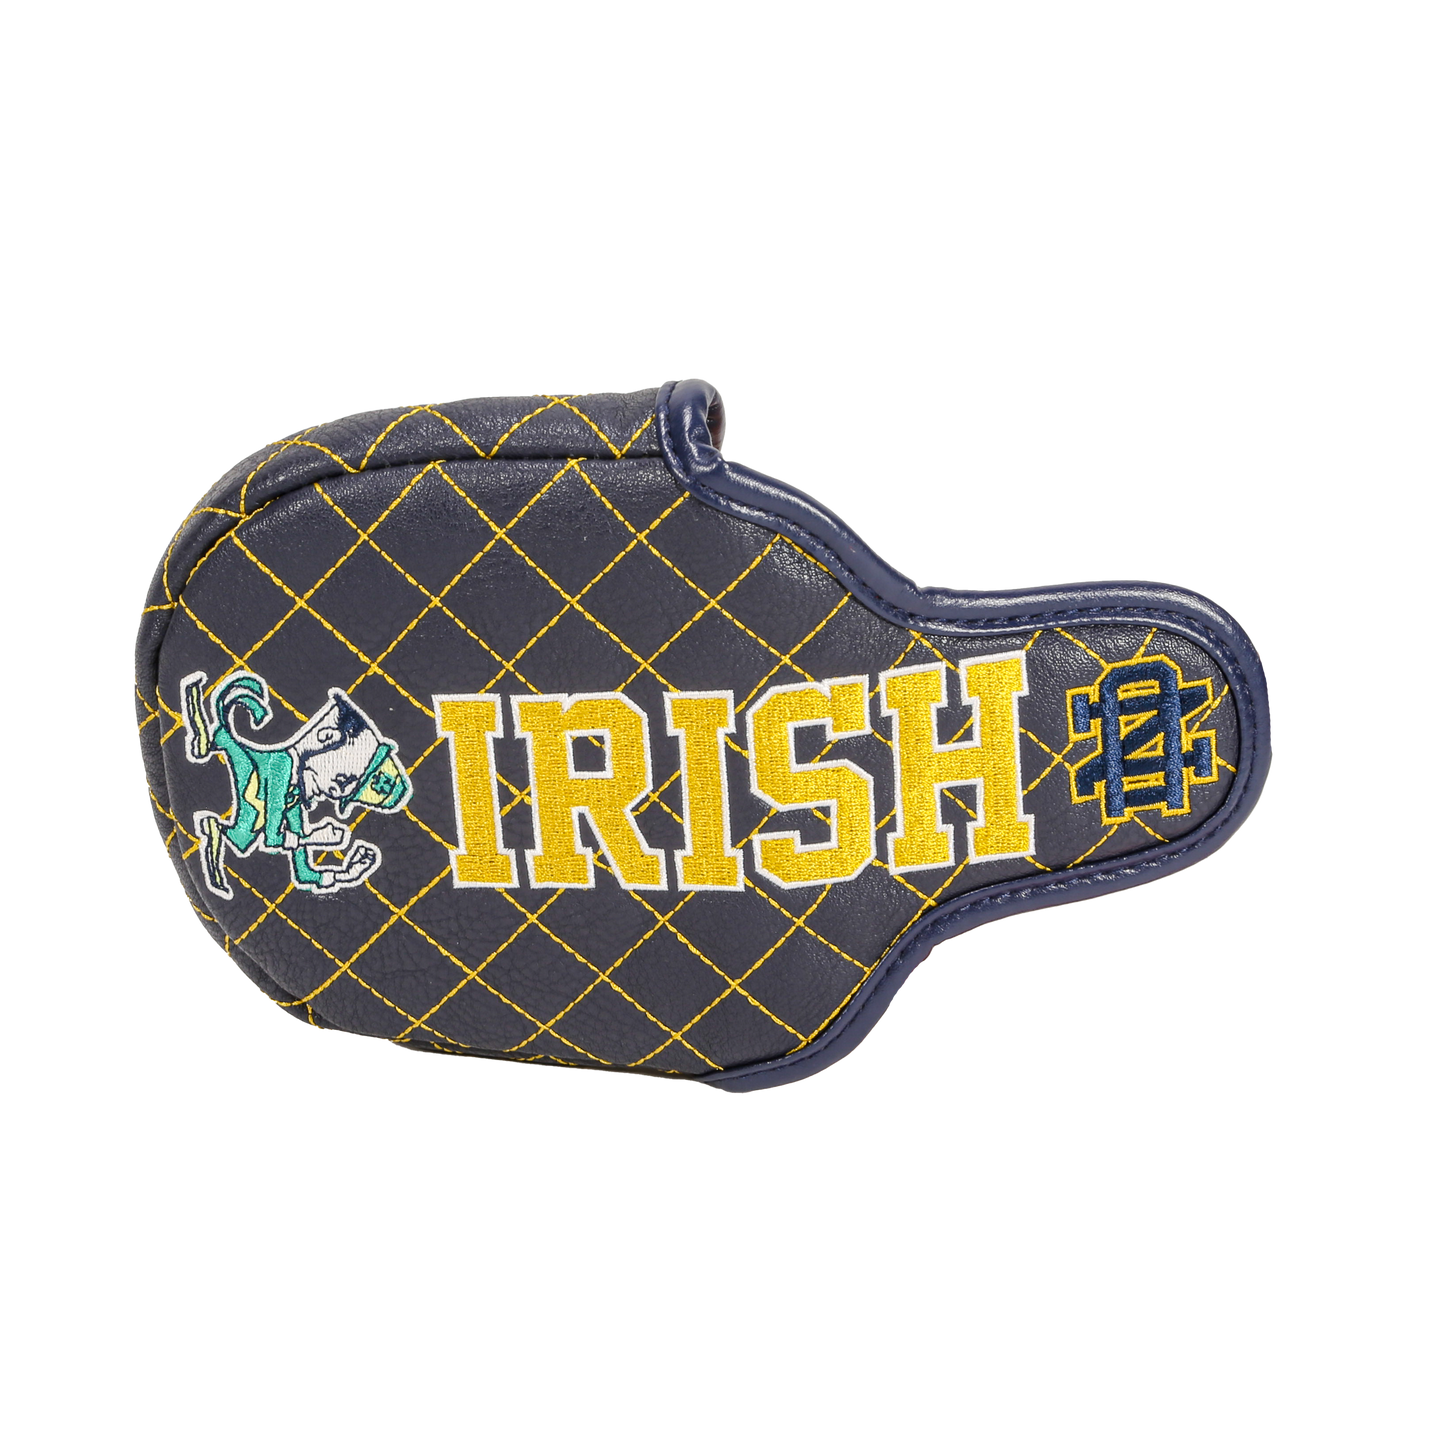 Notre Dame "Irish" Mallet Putter Cover